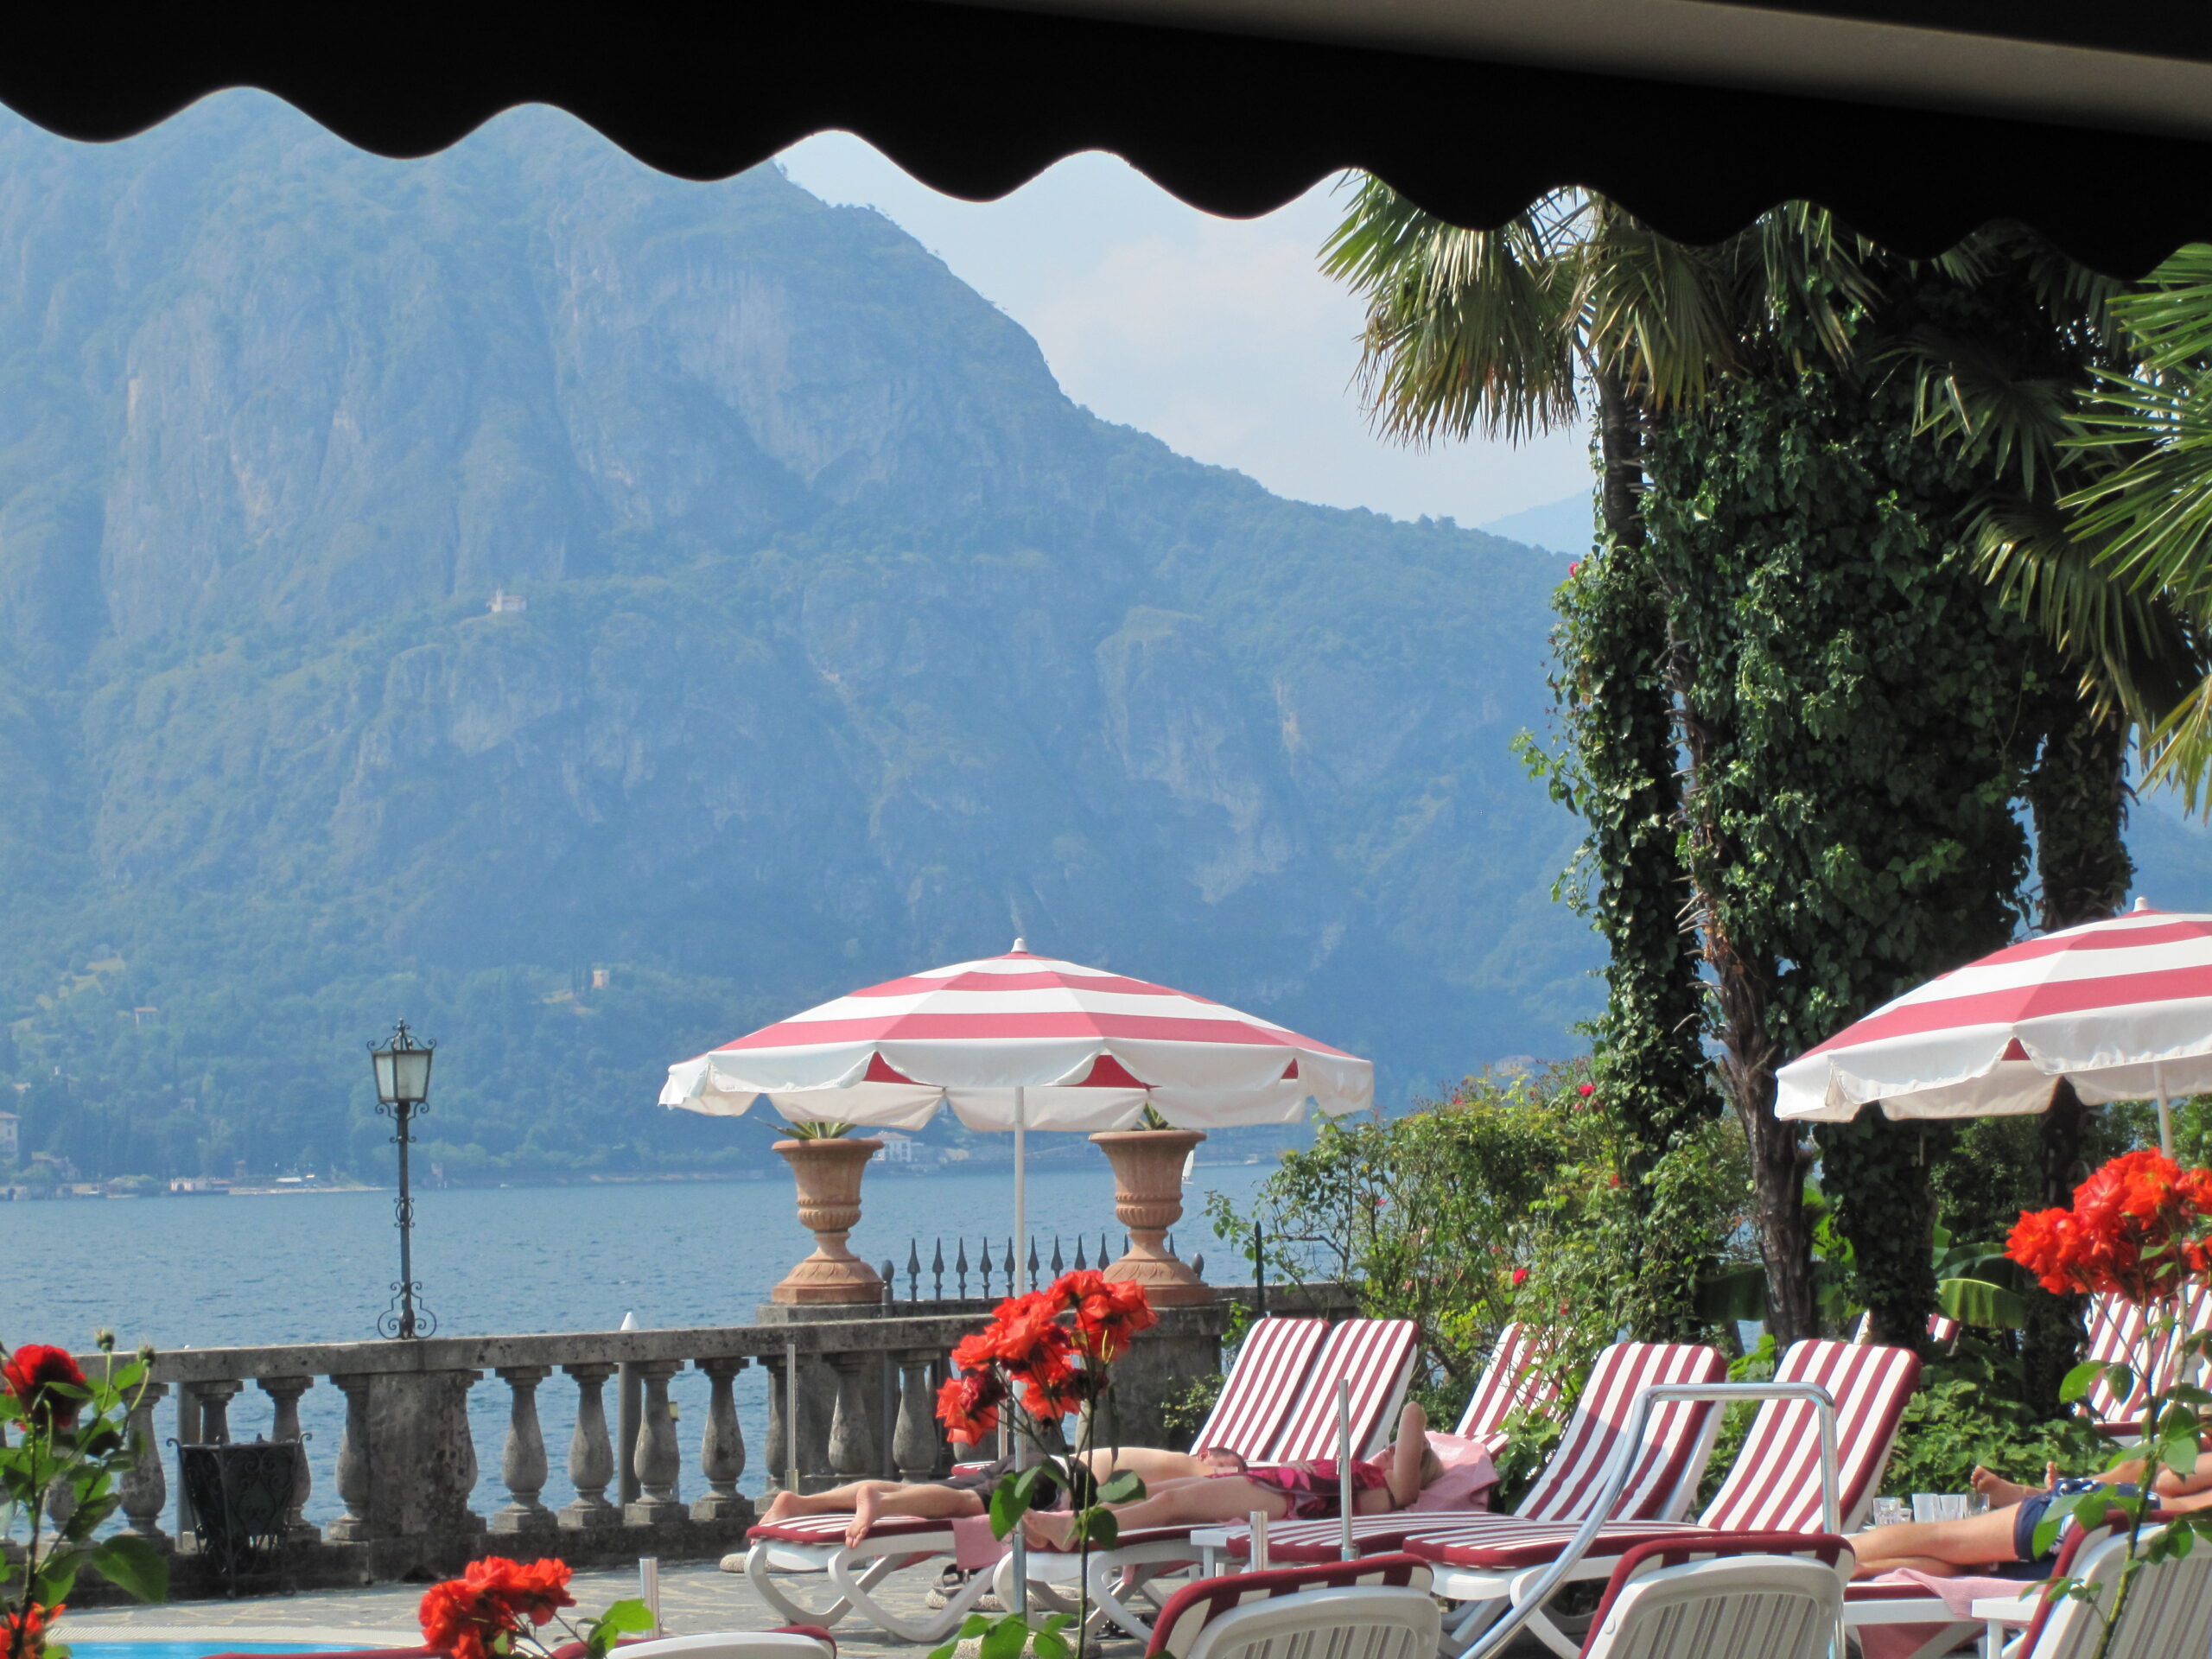 Terrace of Grand Hotel Villa Serbelloni, Bellagio. Photograph by The Traveling Gentleman @travelinggentleman